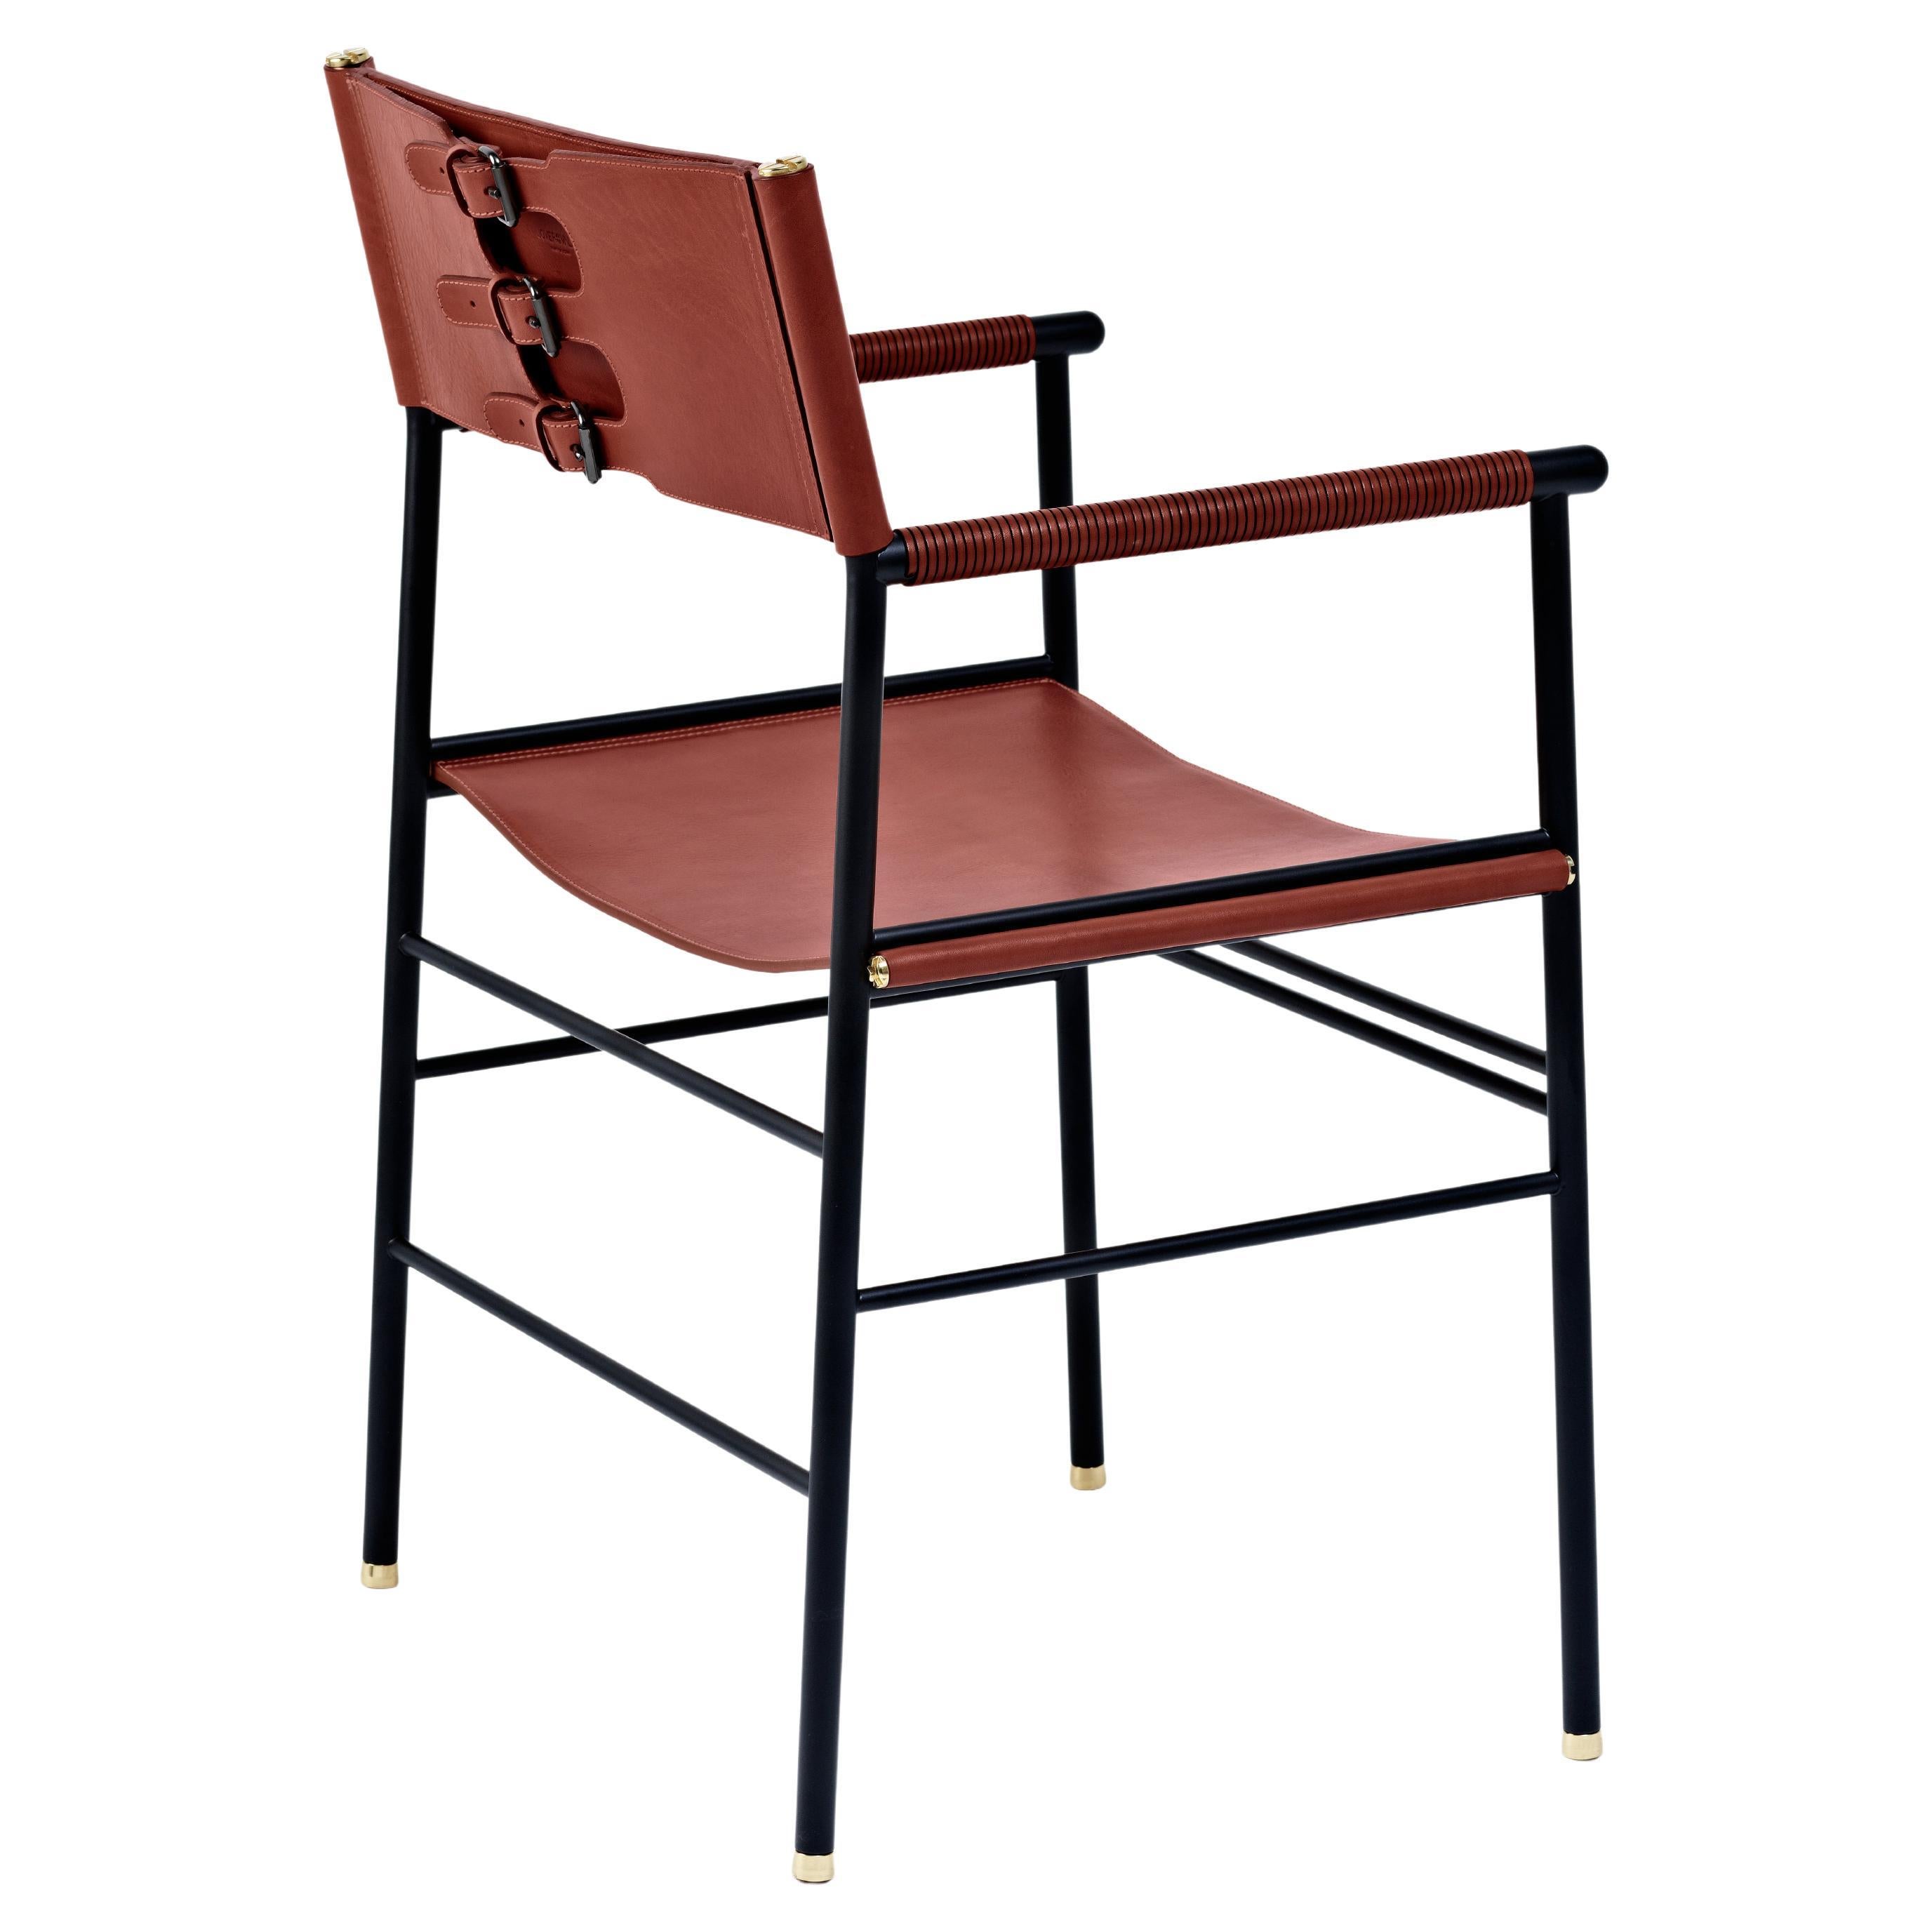 Artisanal Contemporary Chair Cognac Leather & Black Rubber Metal